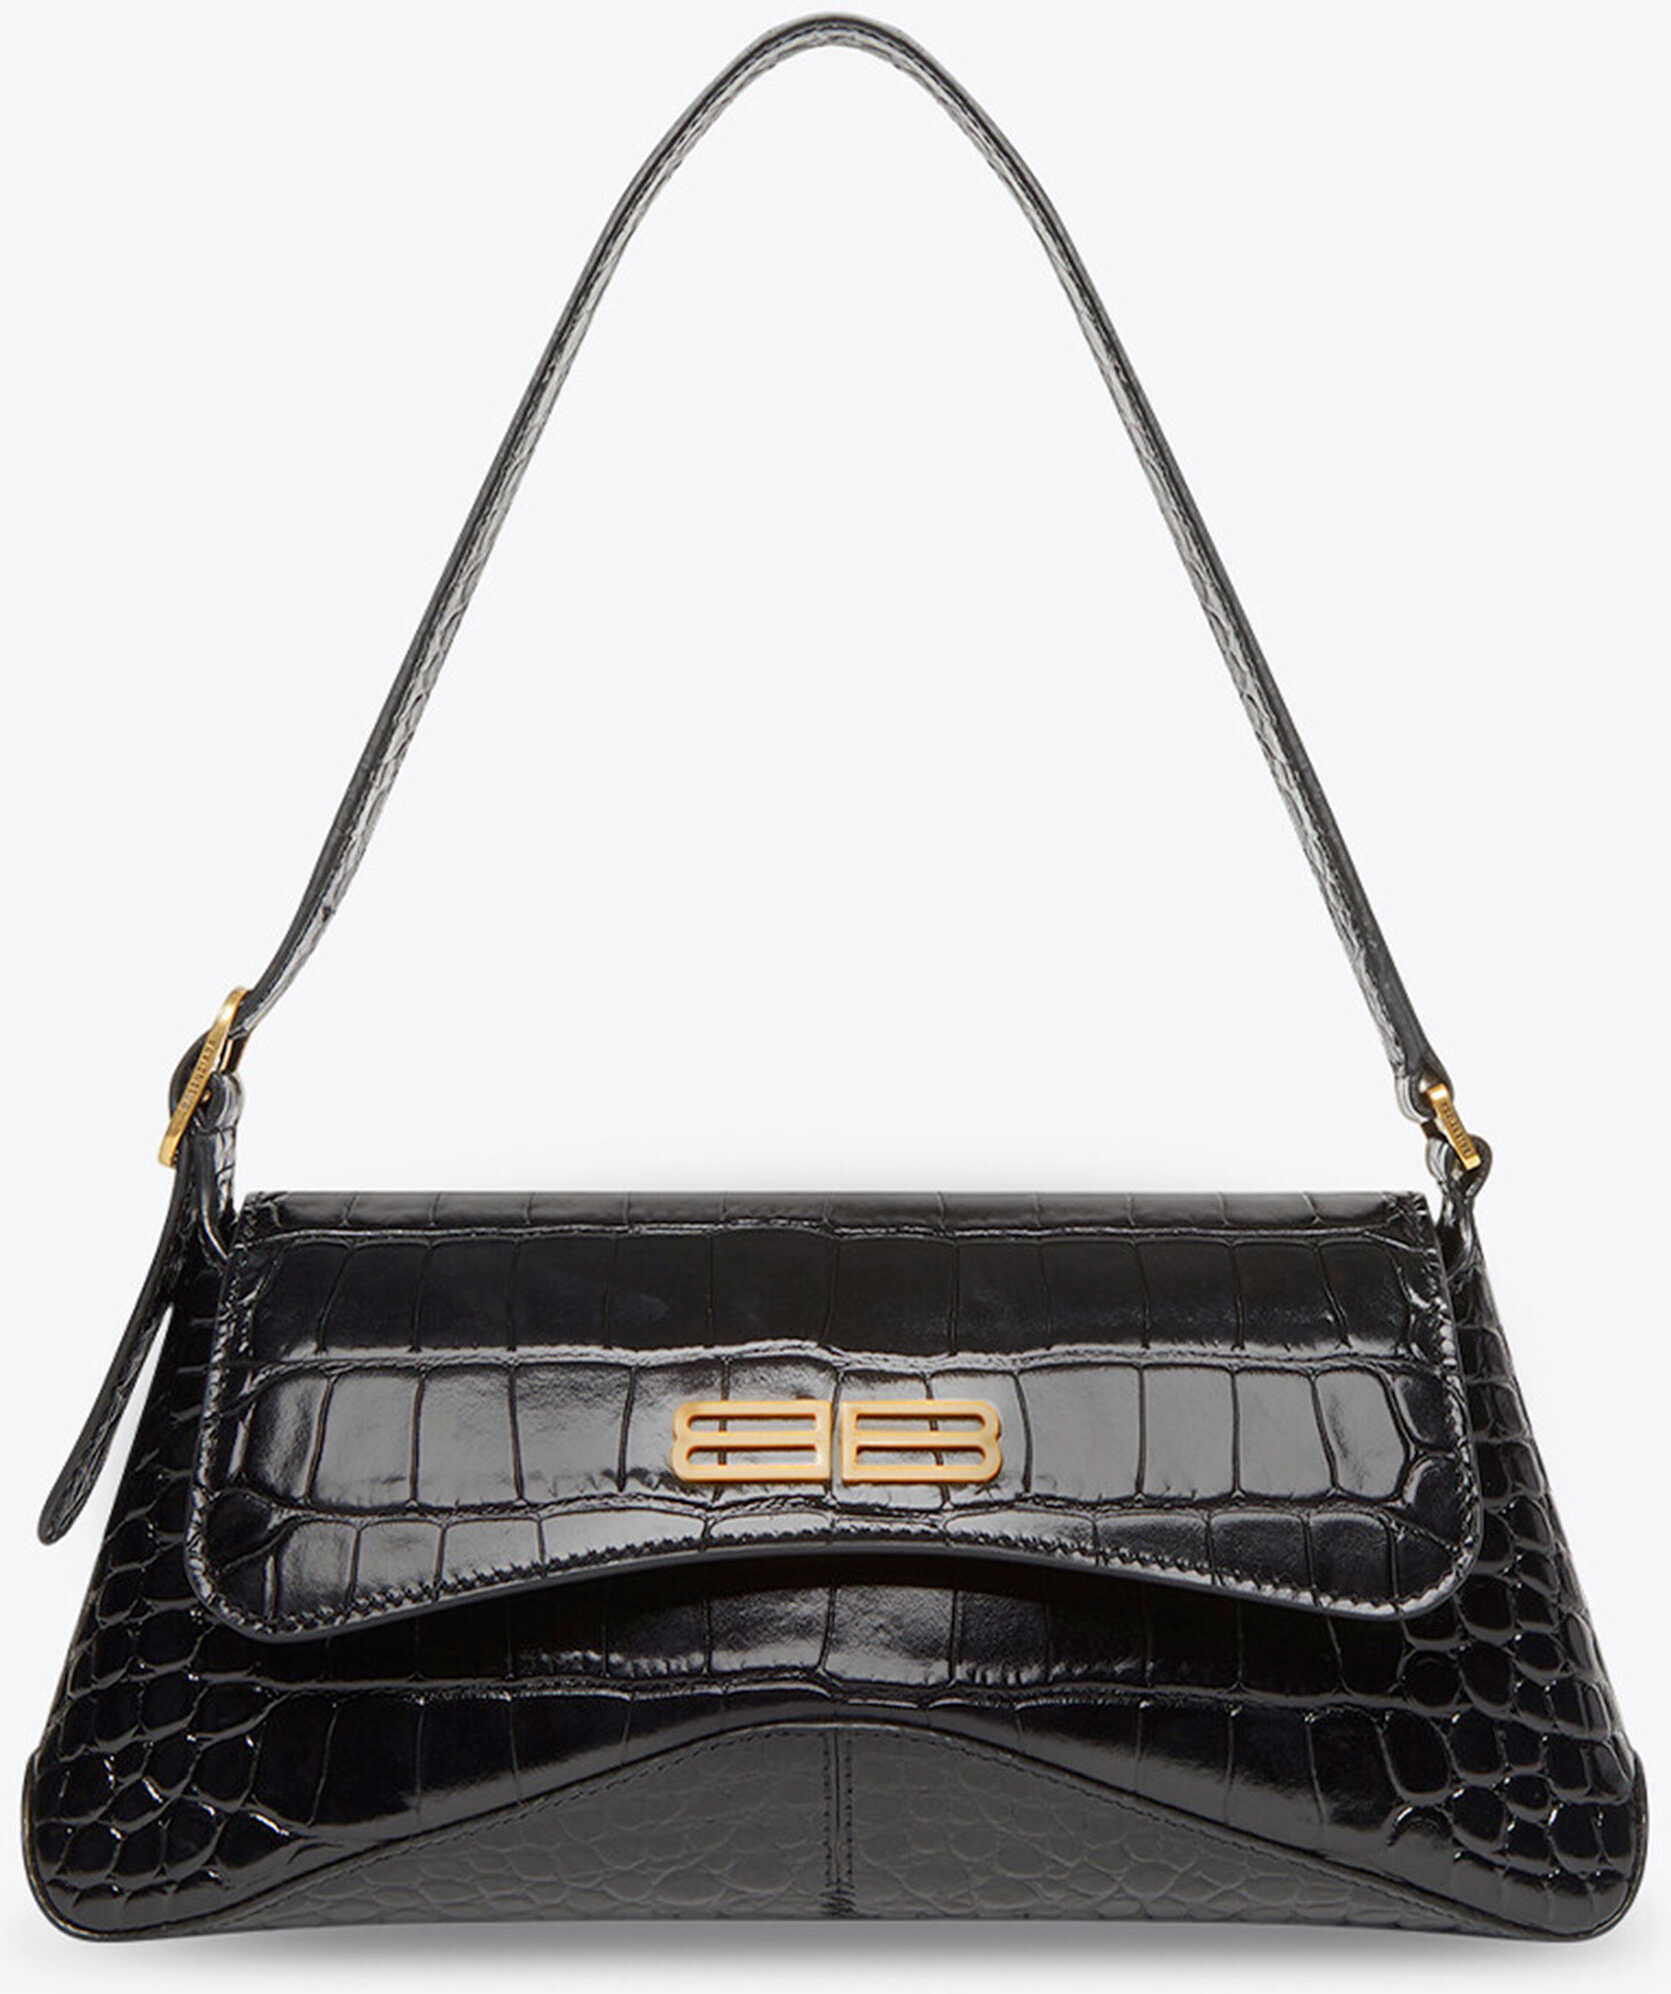 Balenciaga Xx Small Flap Bag Black image0